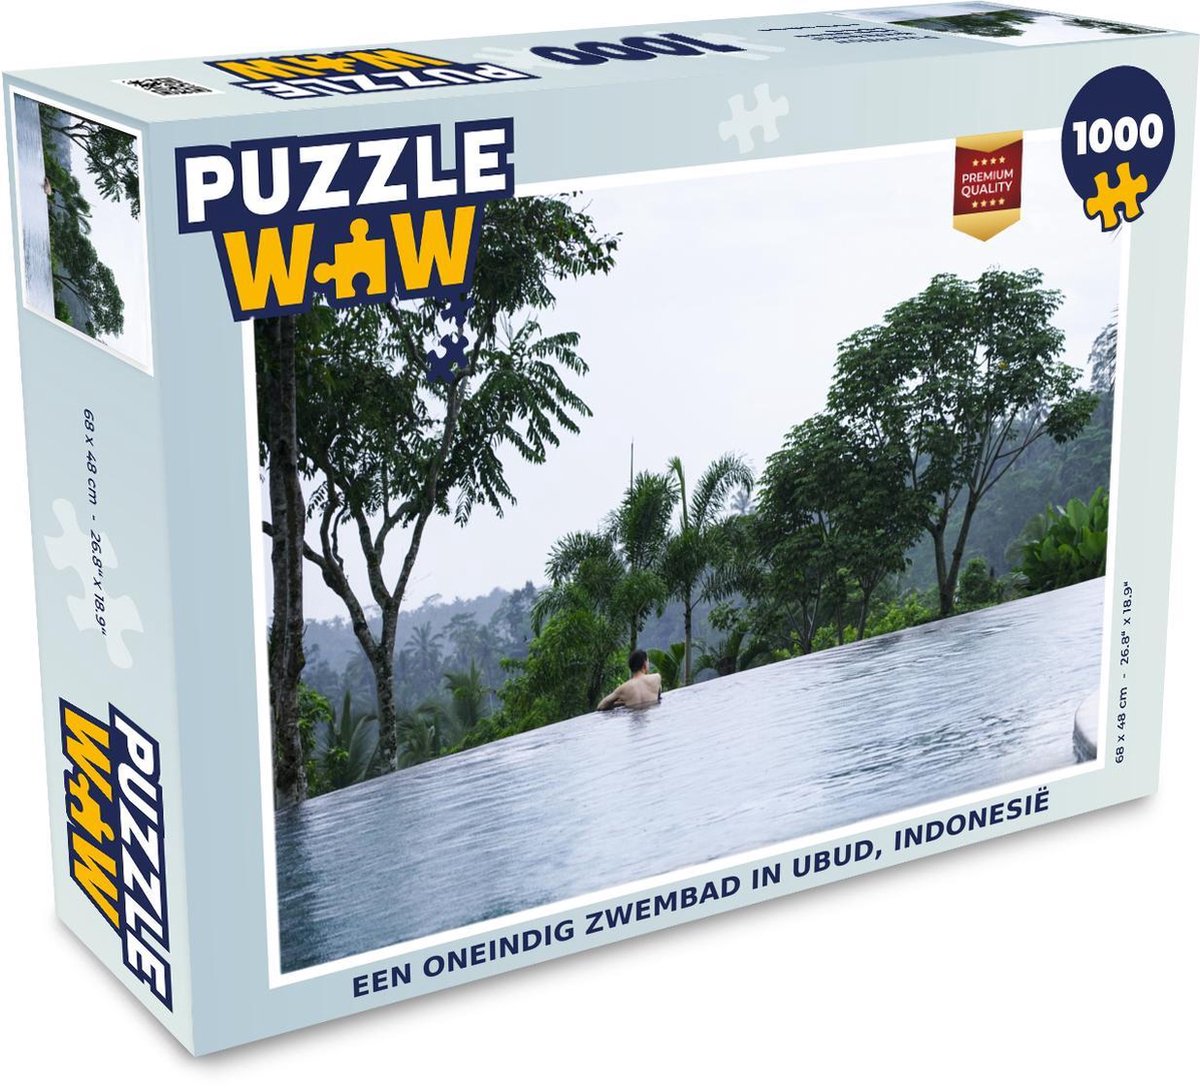 Puzzel Een oneindig zwembad in Ubud, Indonesië - Legpuzzel - Puzzel 1000 stukjes volwassenen - PuzzleWow